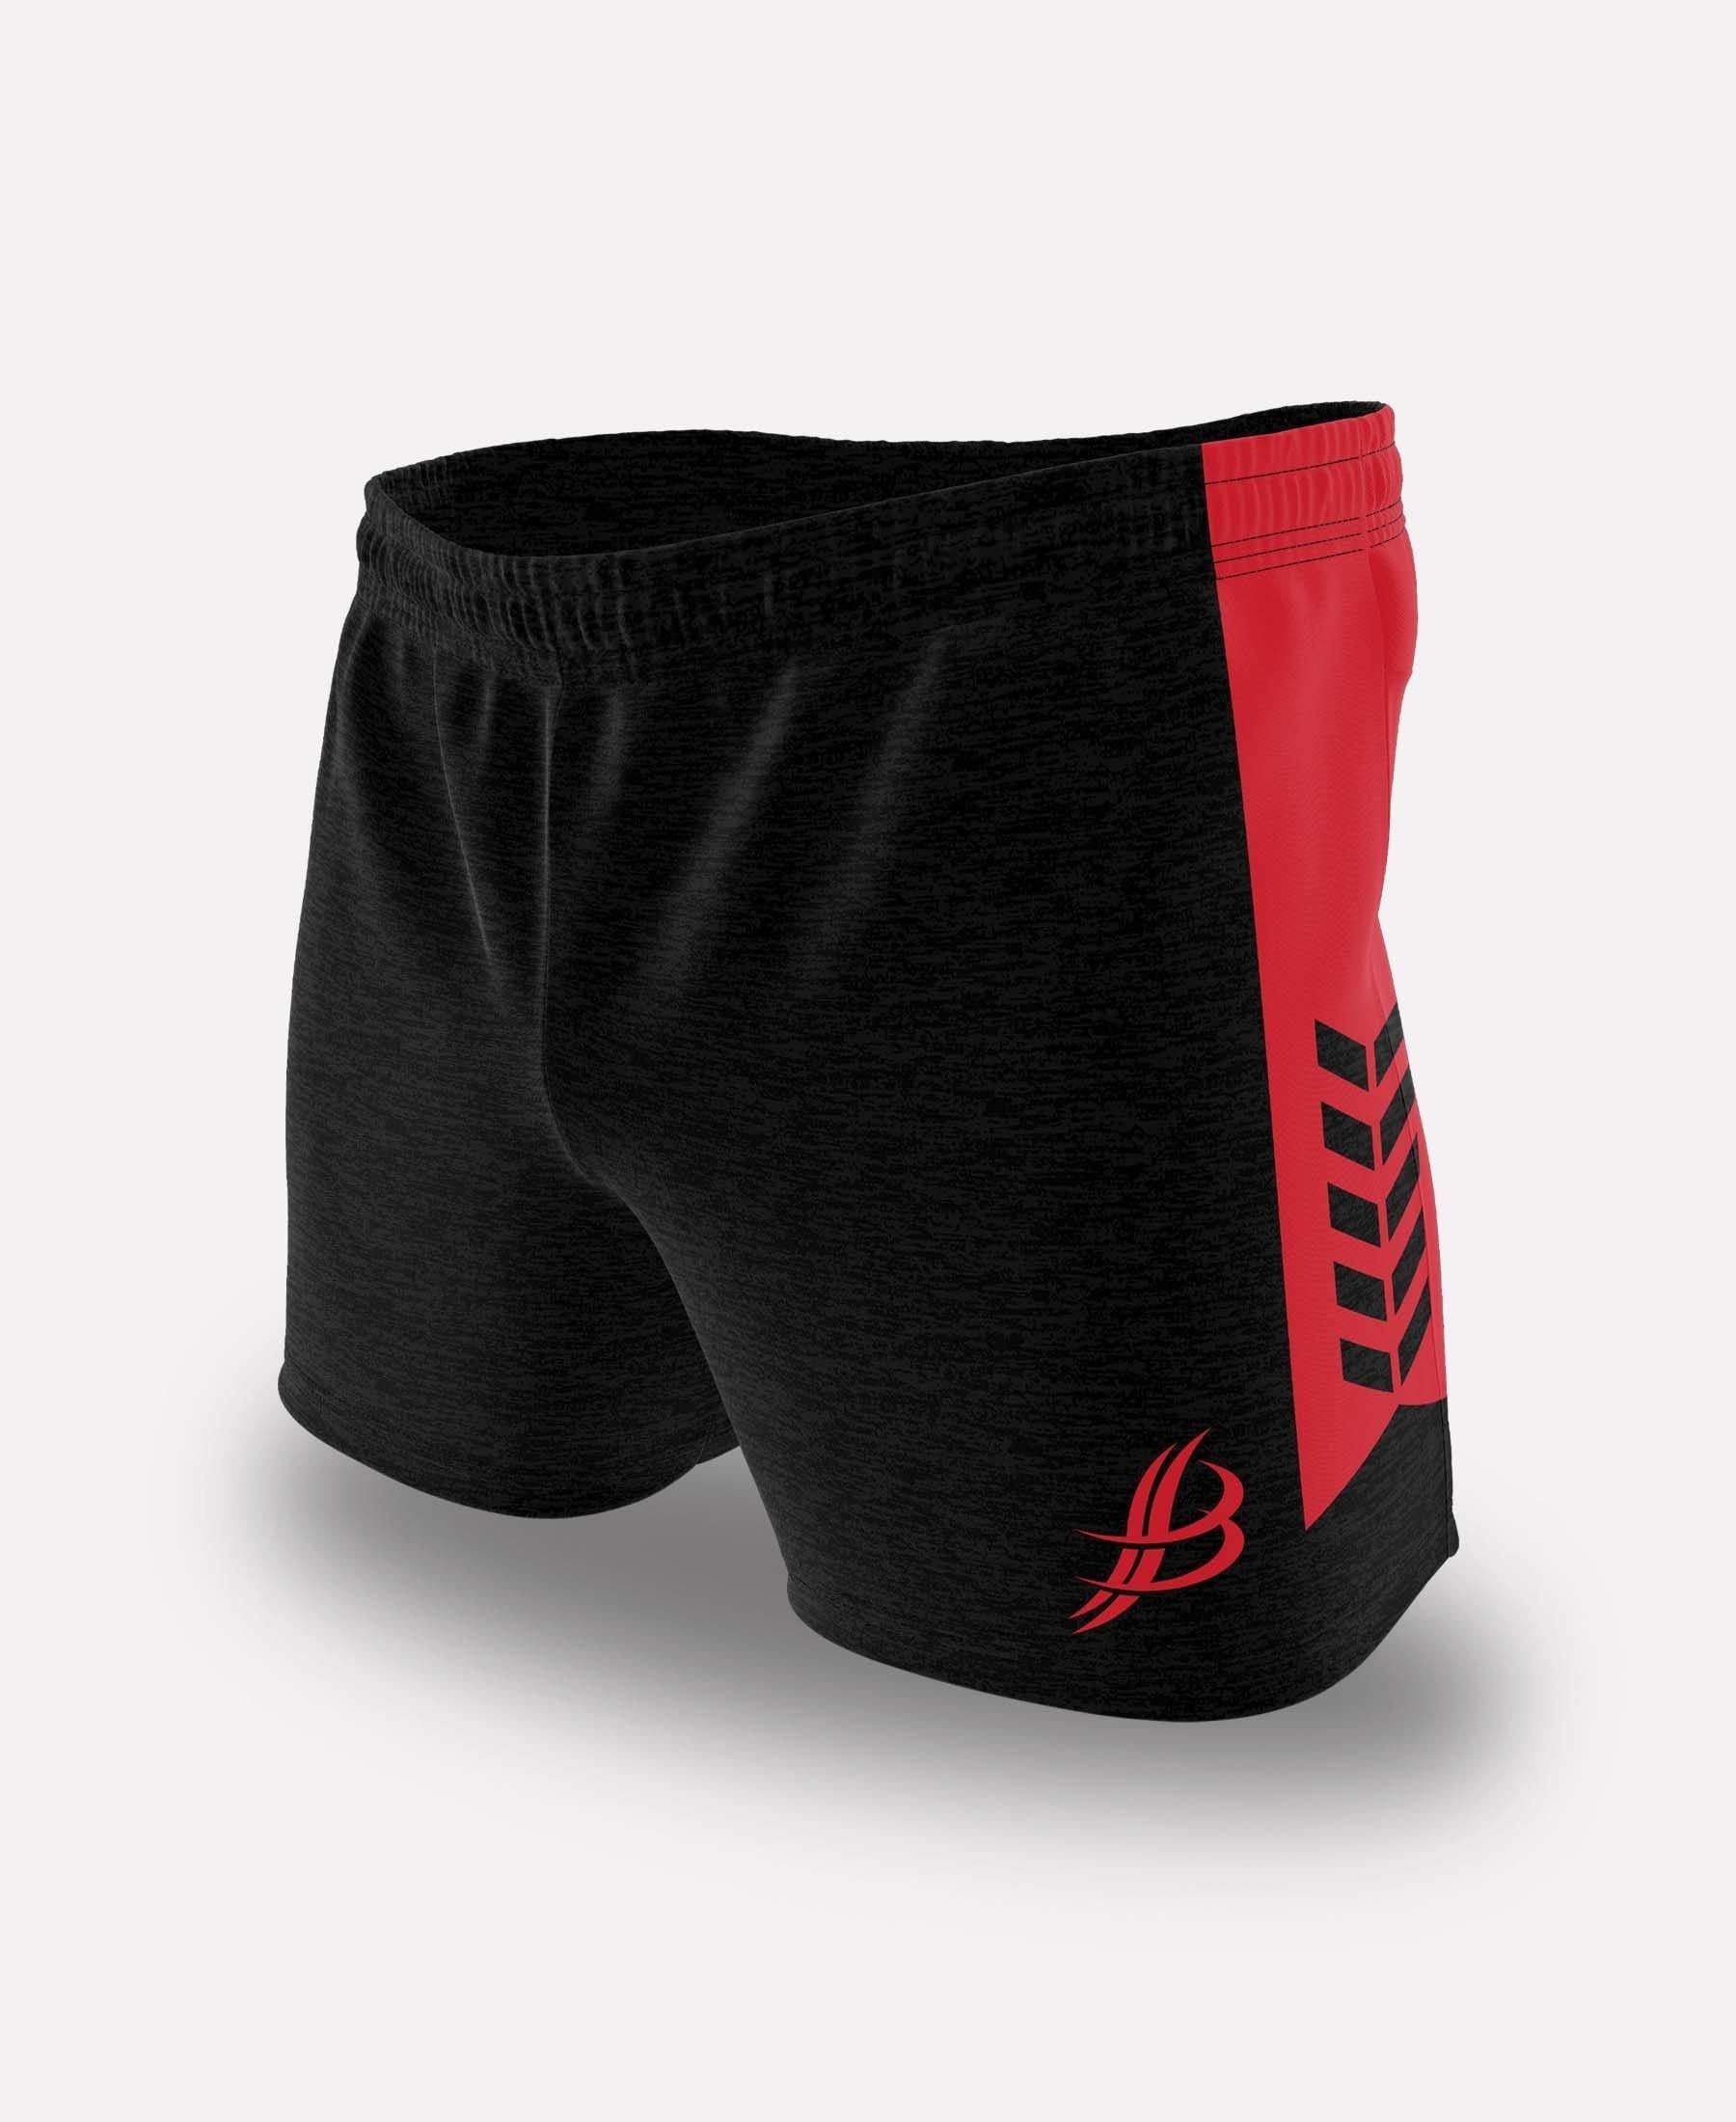 Bua20 Kids Shorts Black/Red - Bourke Sports Limited